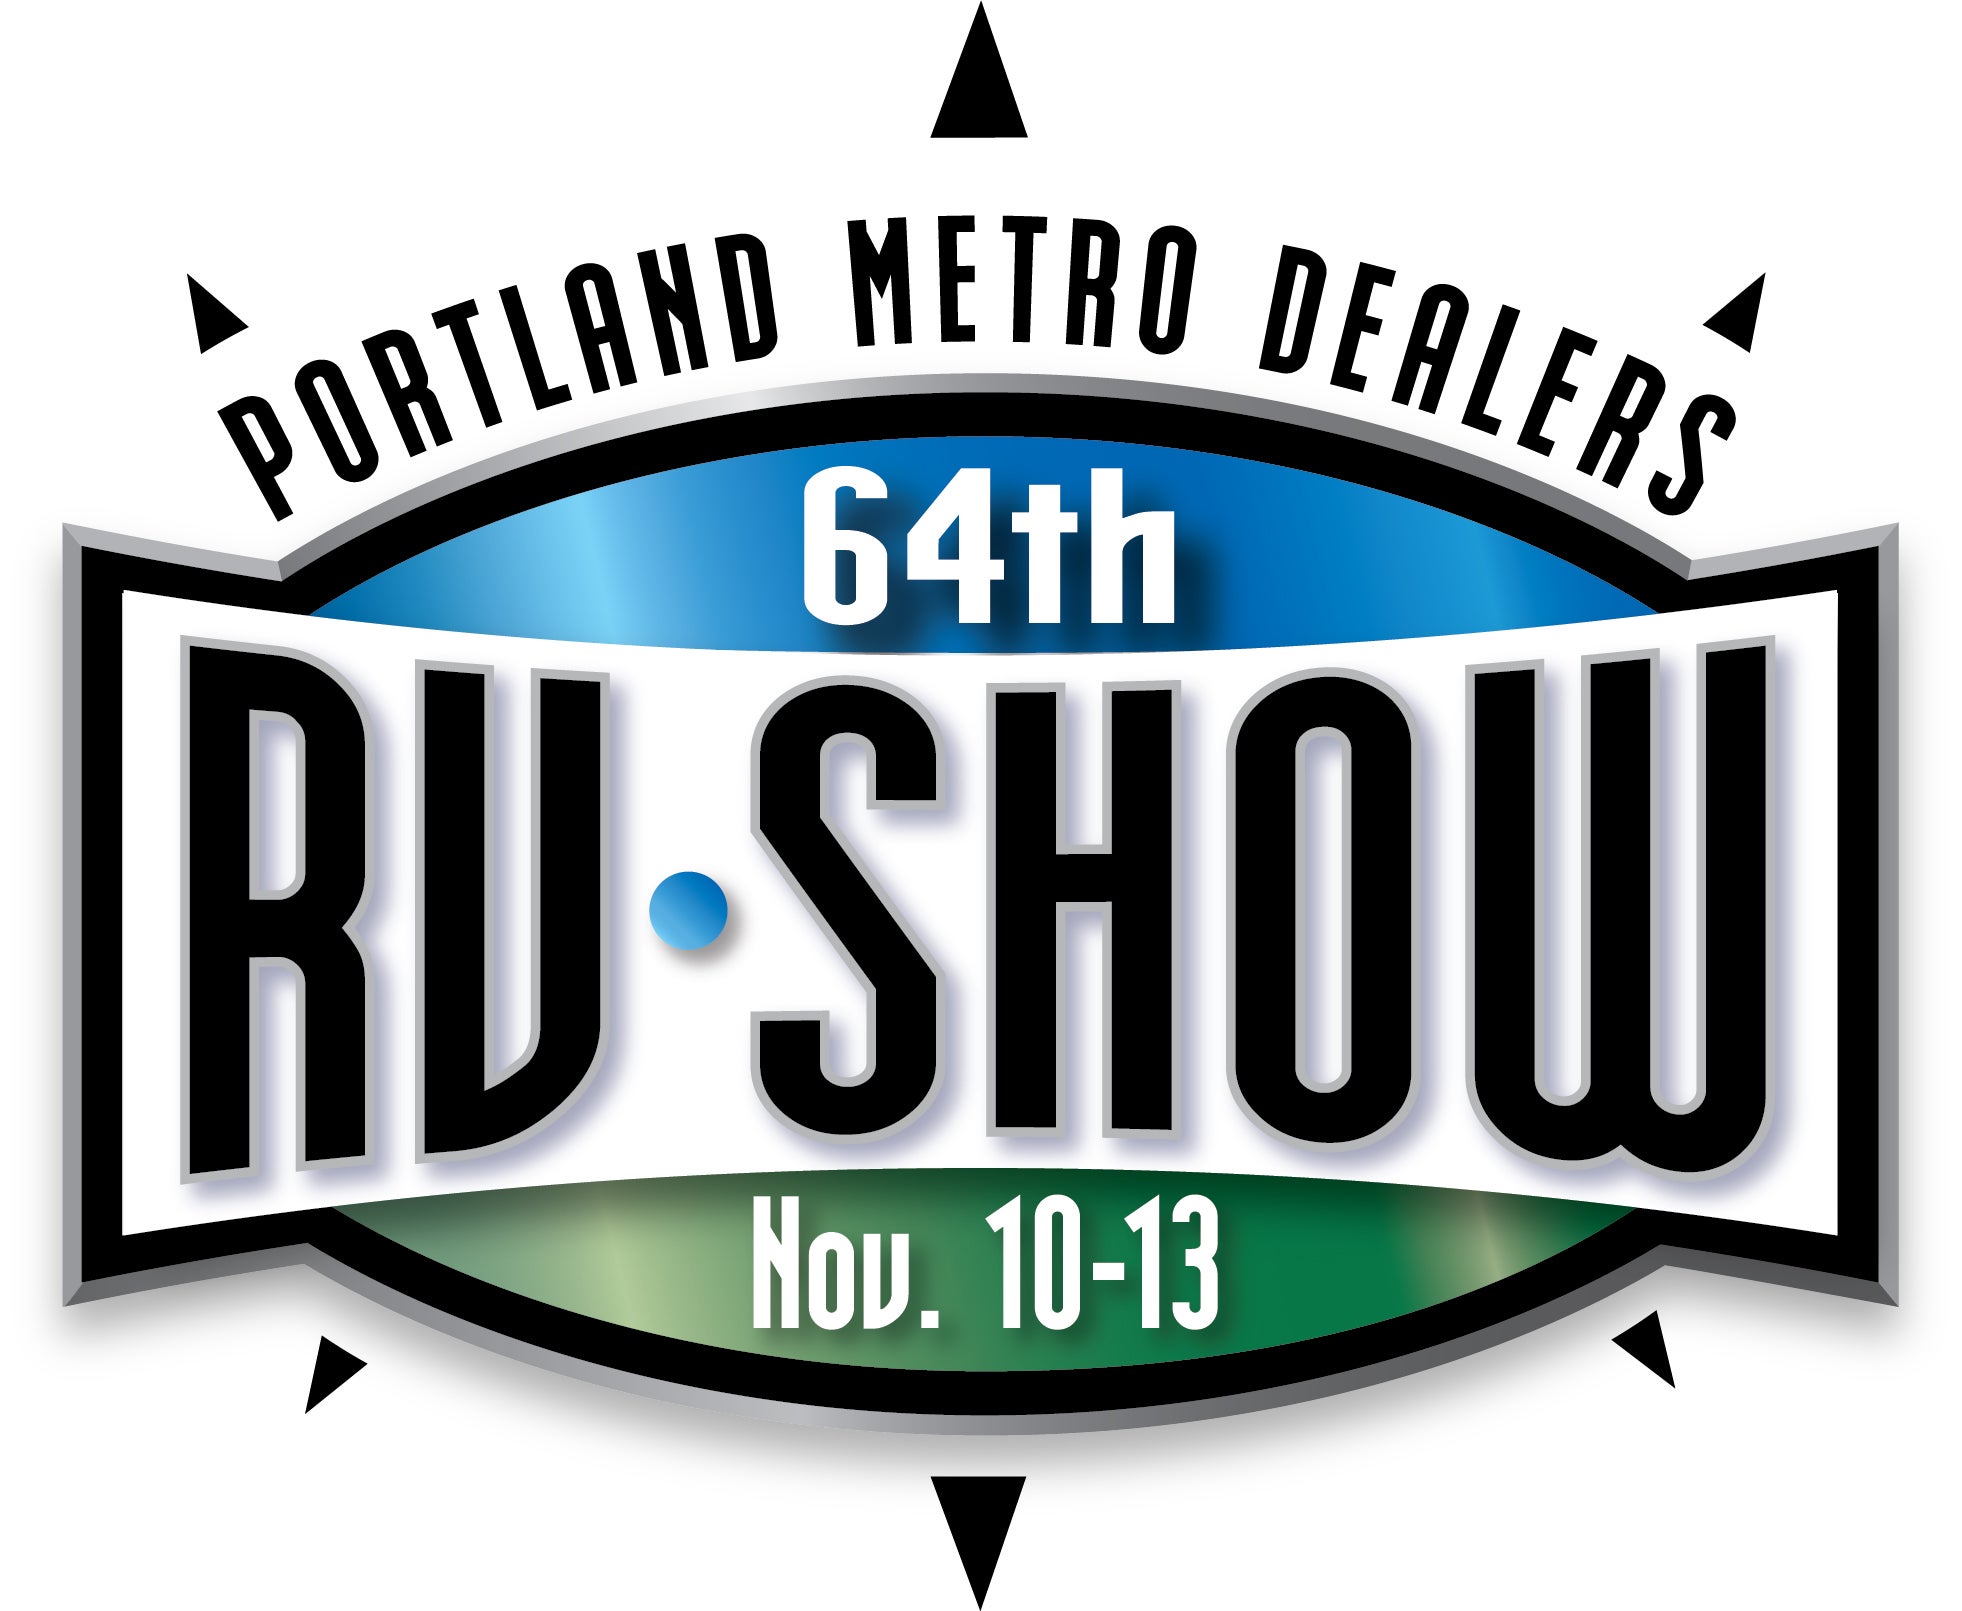 Portland Metro RV Dealers: 64th Annual Fall RV Show